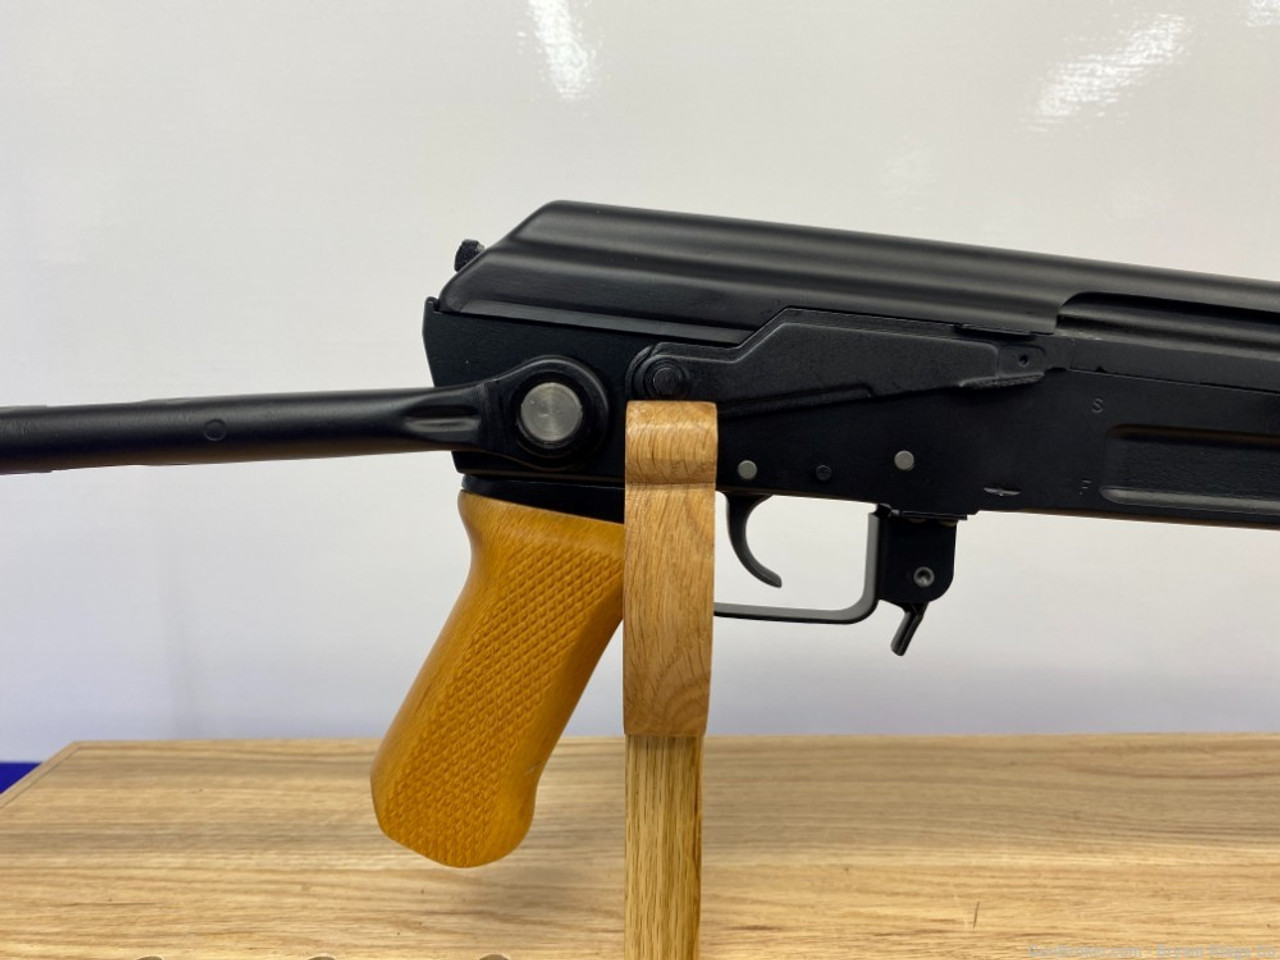 ARSENAL SAS M-7 CLASSIC FDE – Blackstone Shooting Sports